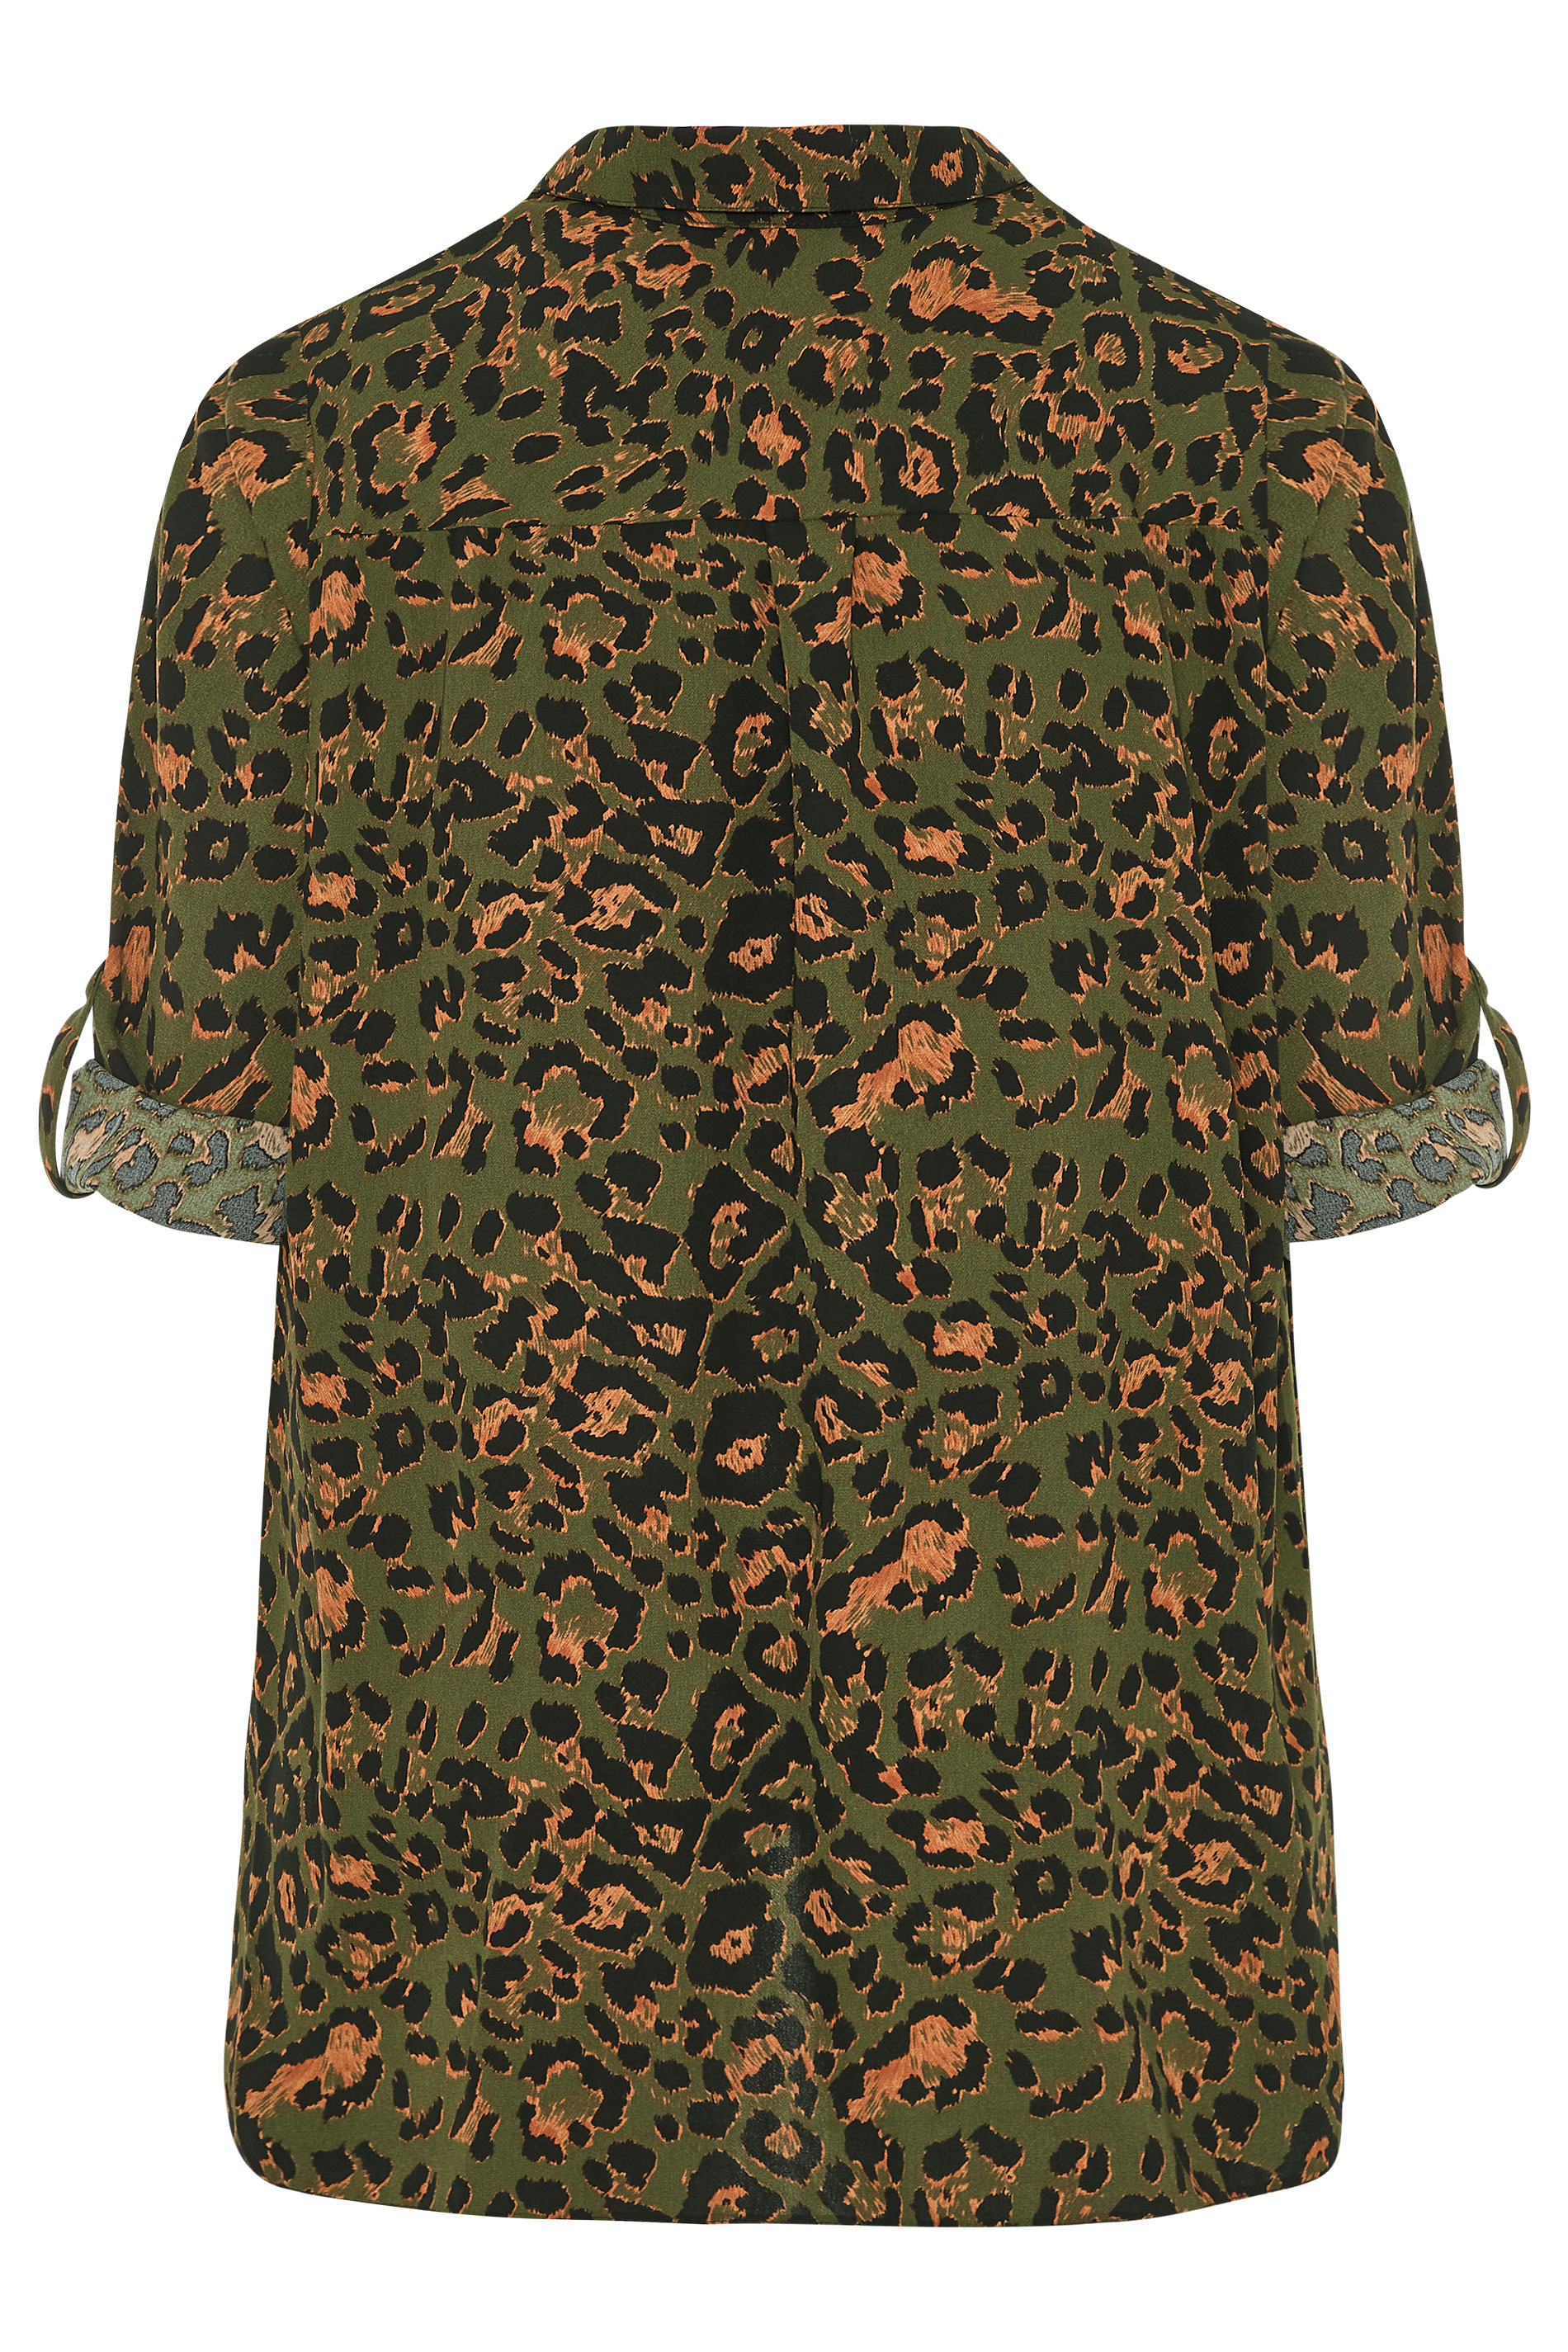 Khaki Leopard Print Longline Shirt | Yours Clothing